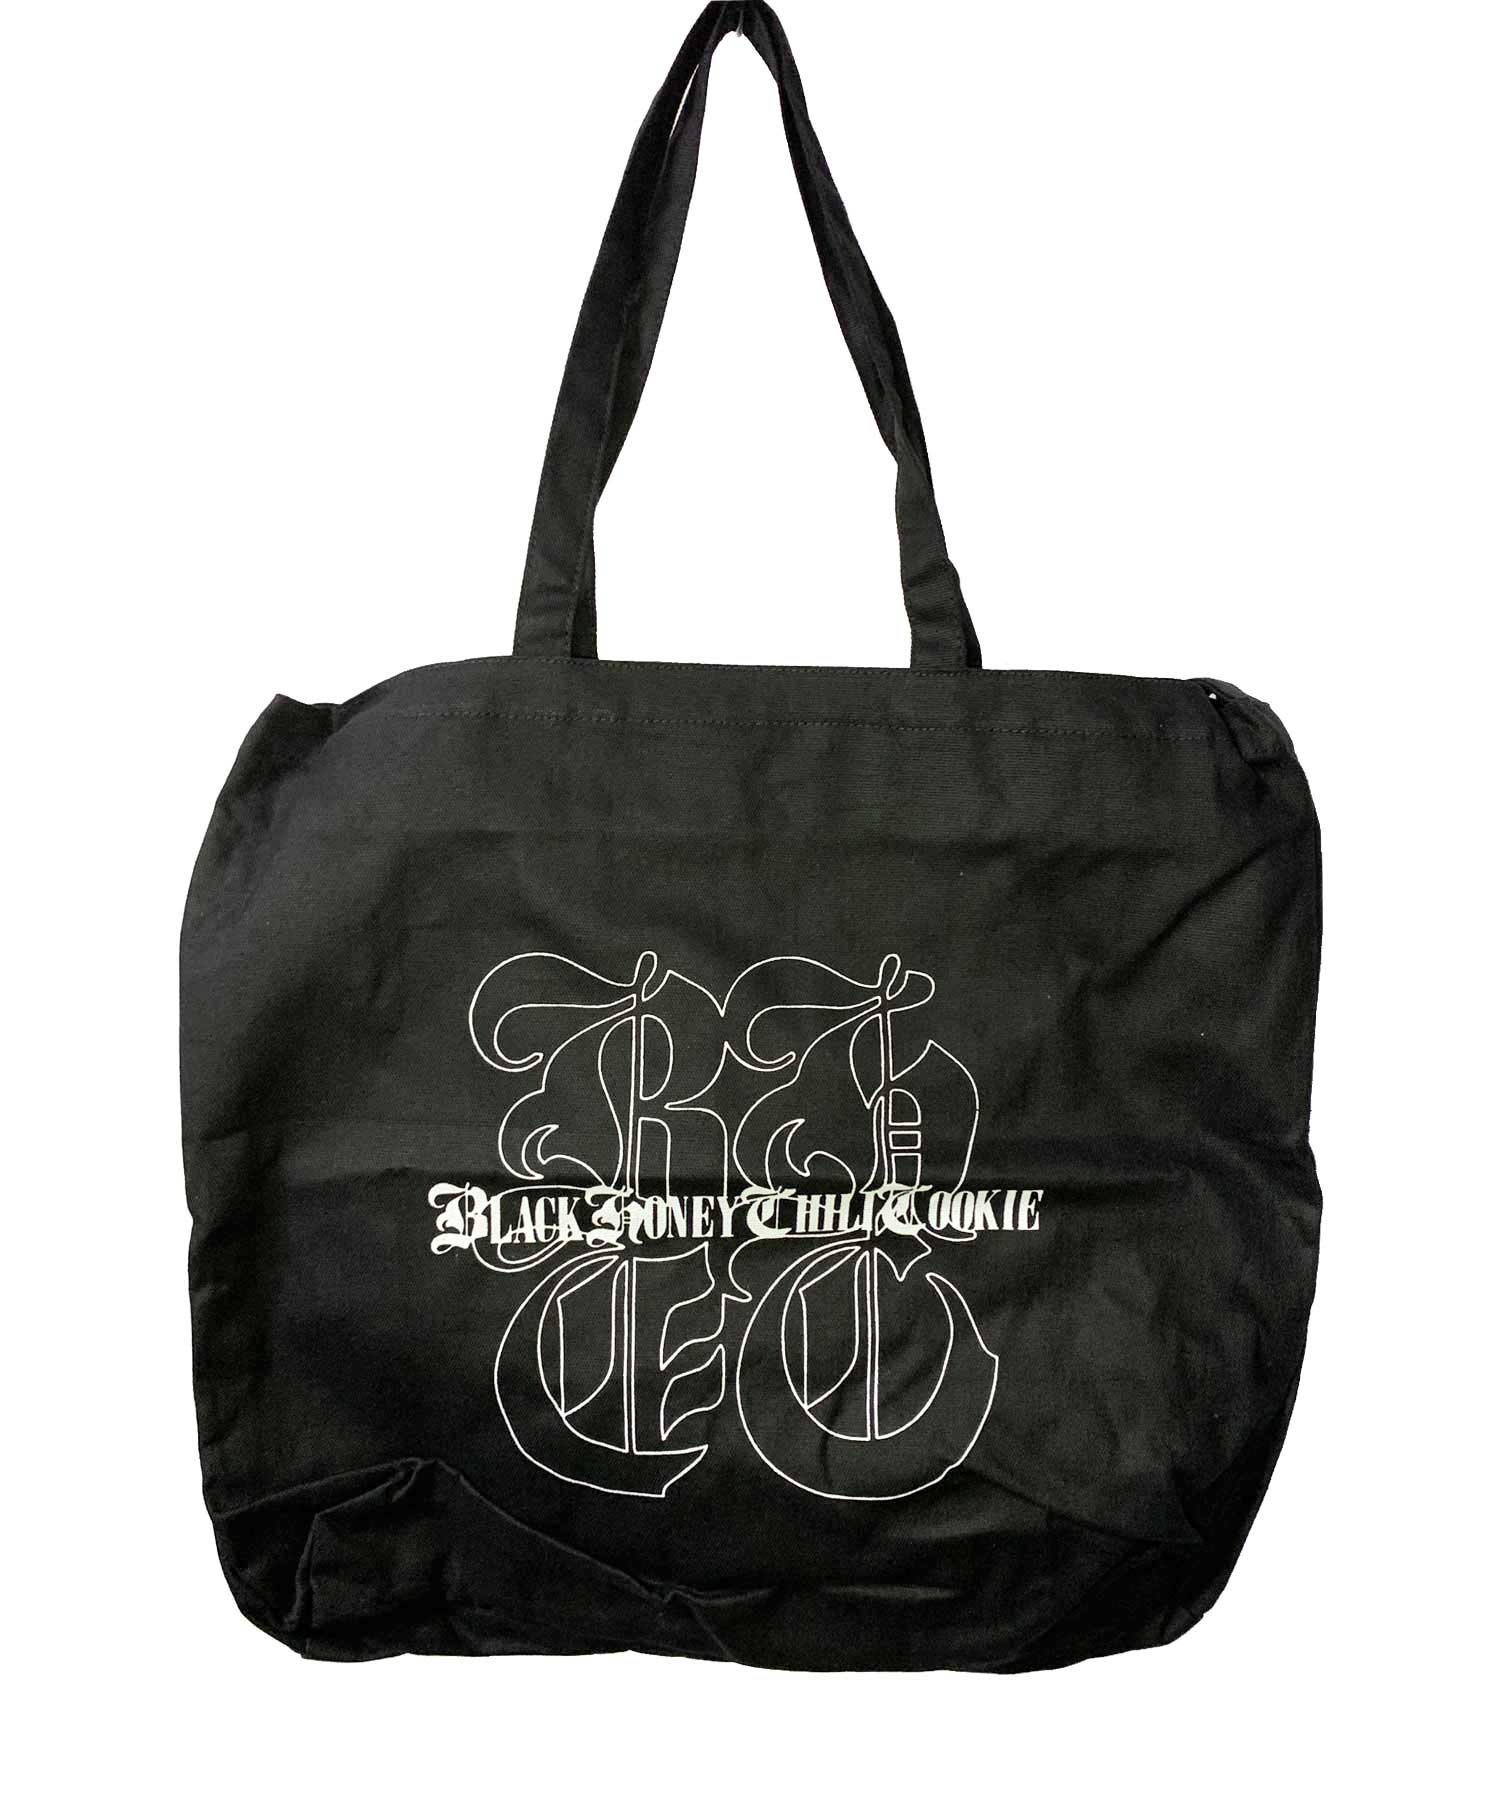 BLACK HONEY CHILI COOKIE（ブラックハニーチリクッキー）B.H.C.C Big Logo Tote Bag